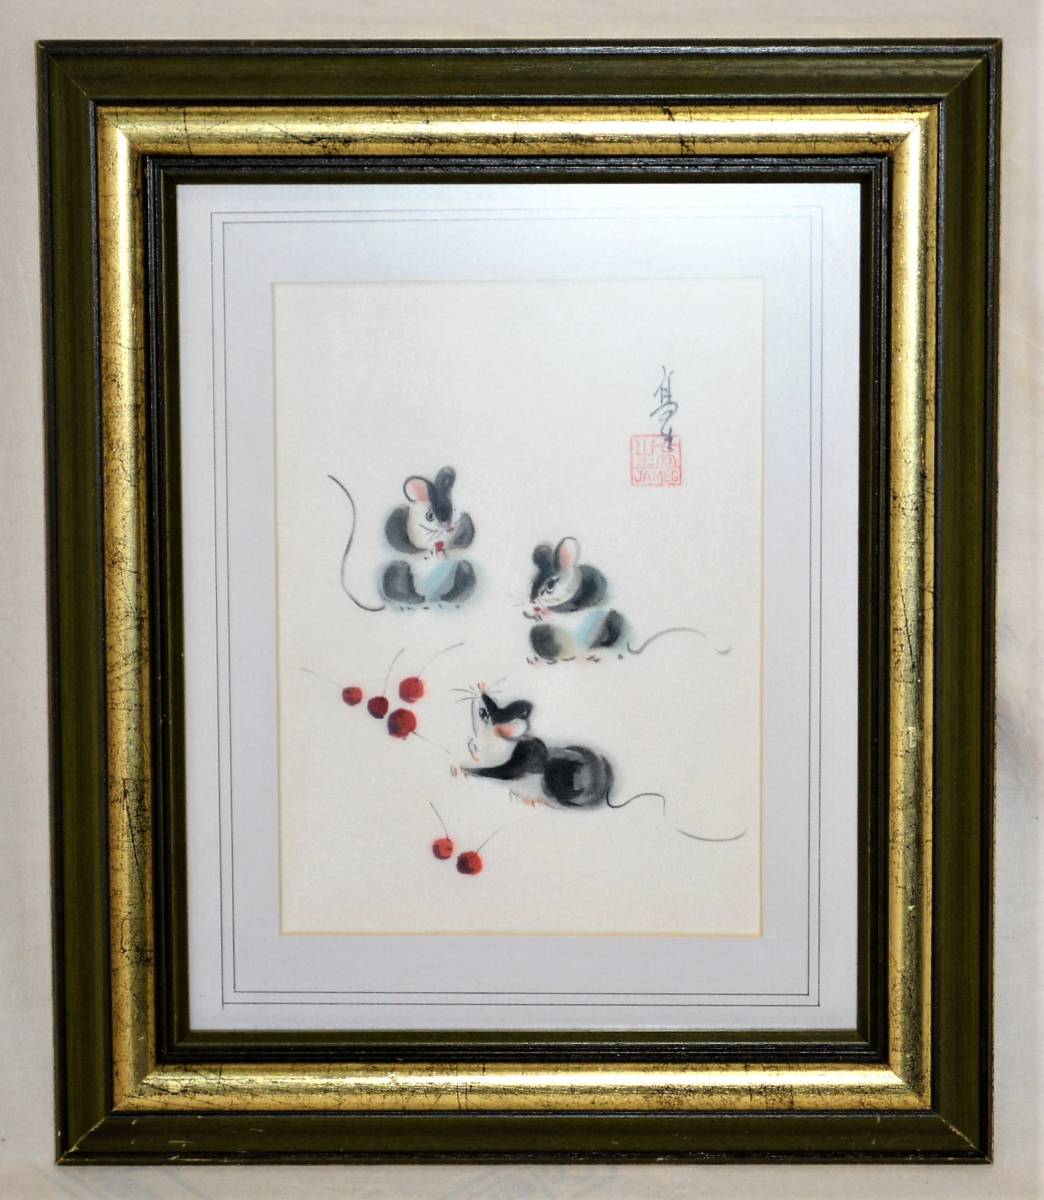 HNG-76 [الصورة الأصلية] لوحة حريرية أصلية للفأرة أنشأها جيمس كوه (طالب في المدرسة الثانوية) في سنغافورة, تلوين, اللوحة اليابانية, الزهور والطيور, الطيور والوحوش